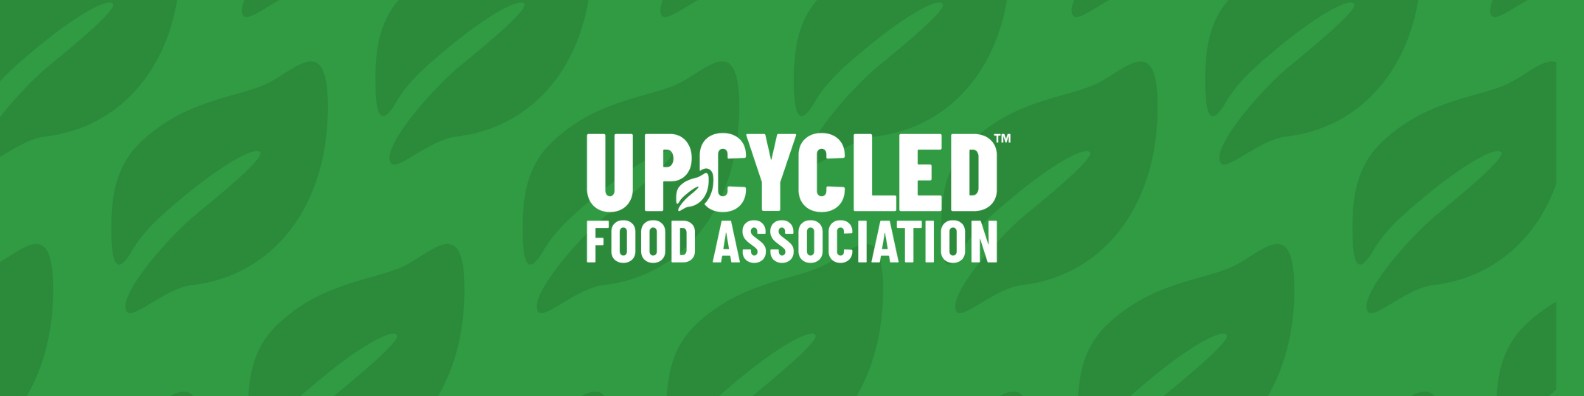 Upcycled Food Association | LinkedIn